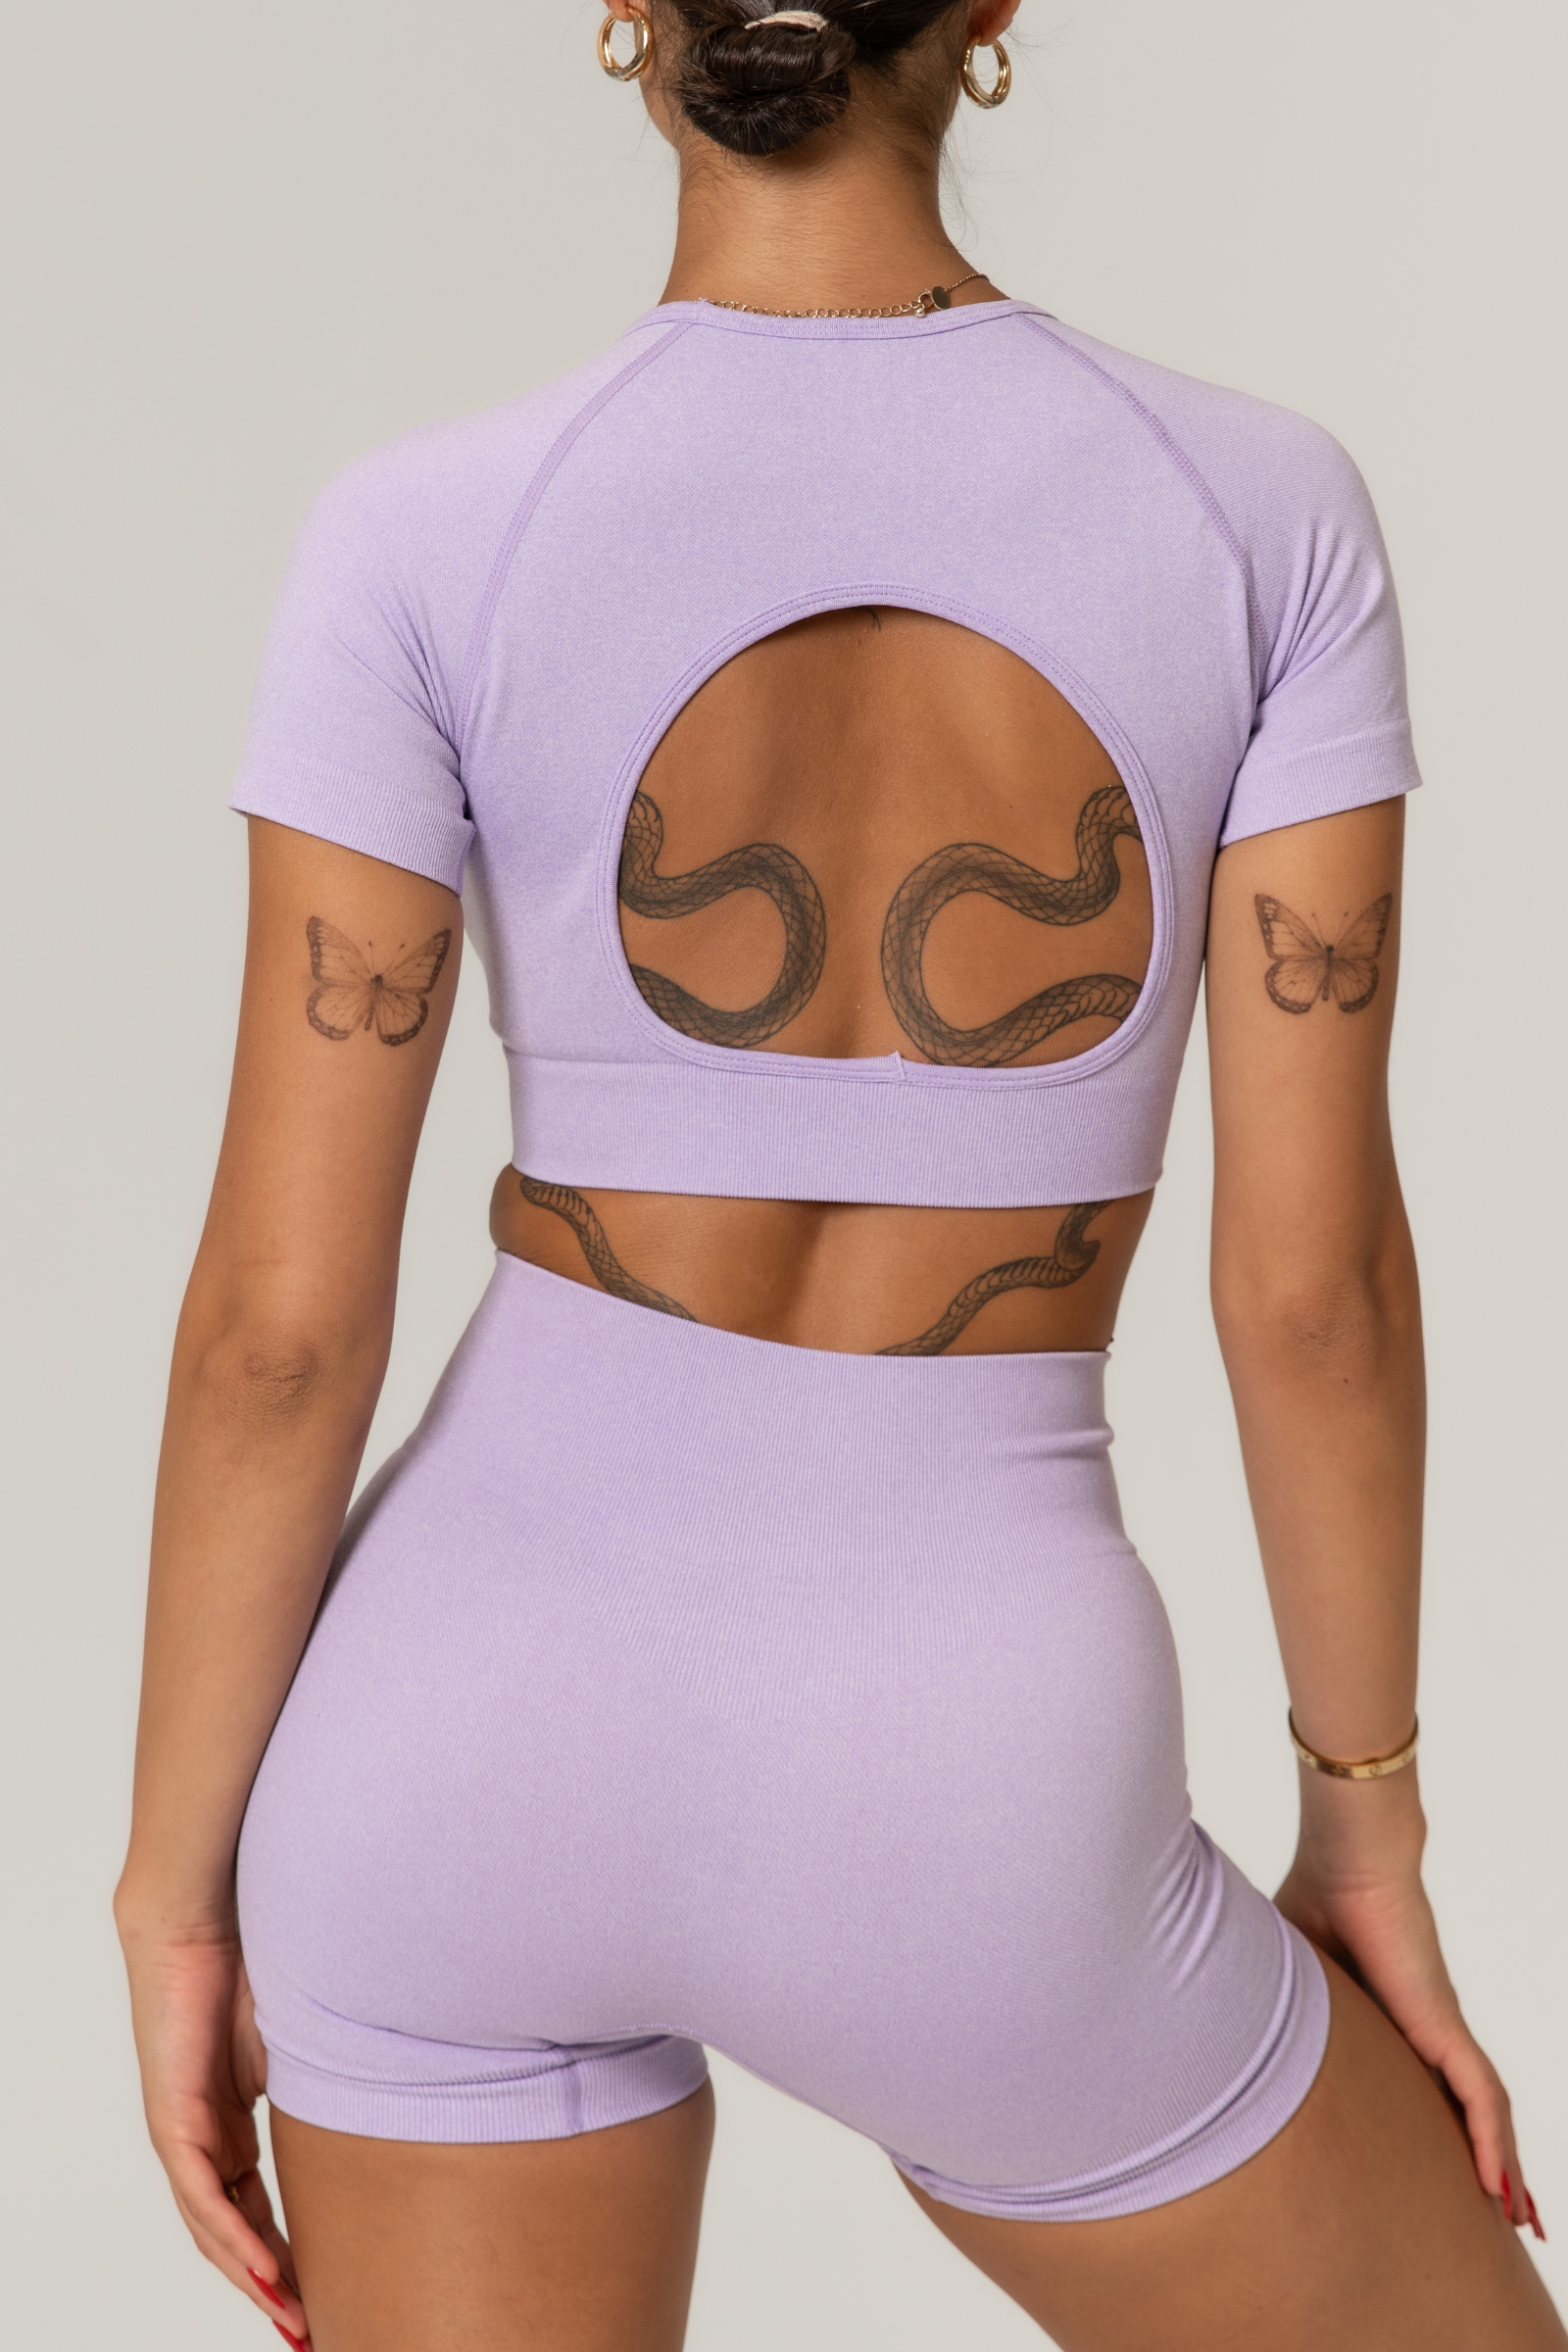 FlexFit Seamless Shorts - Purple